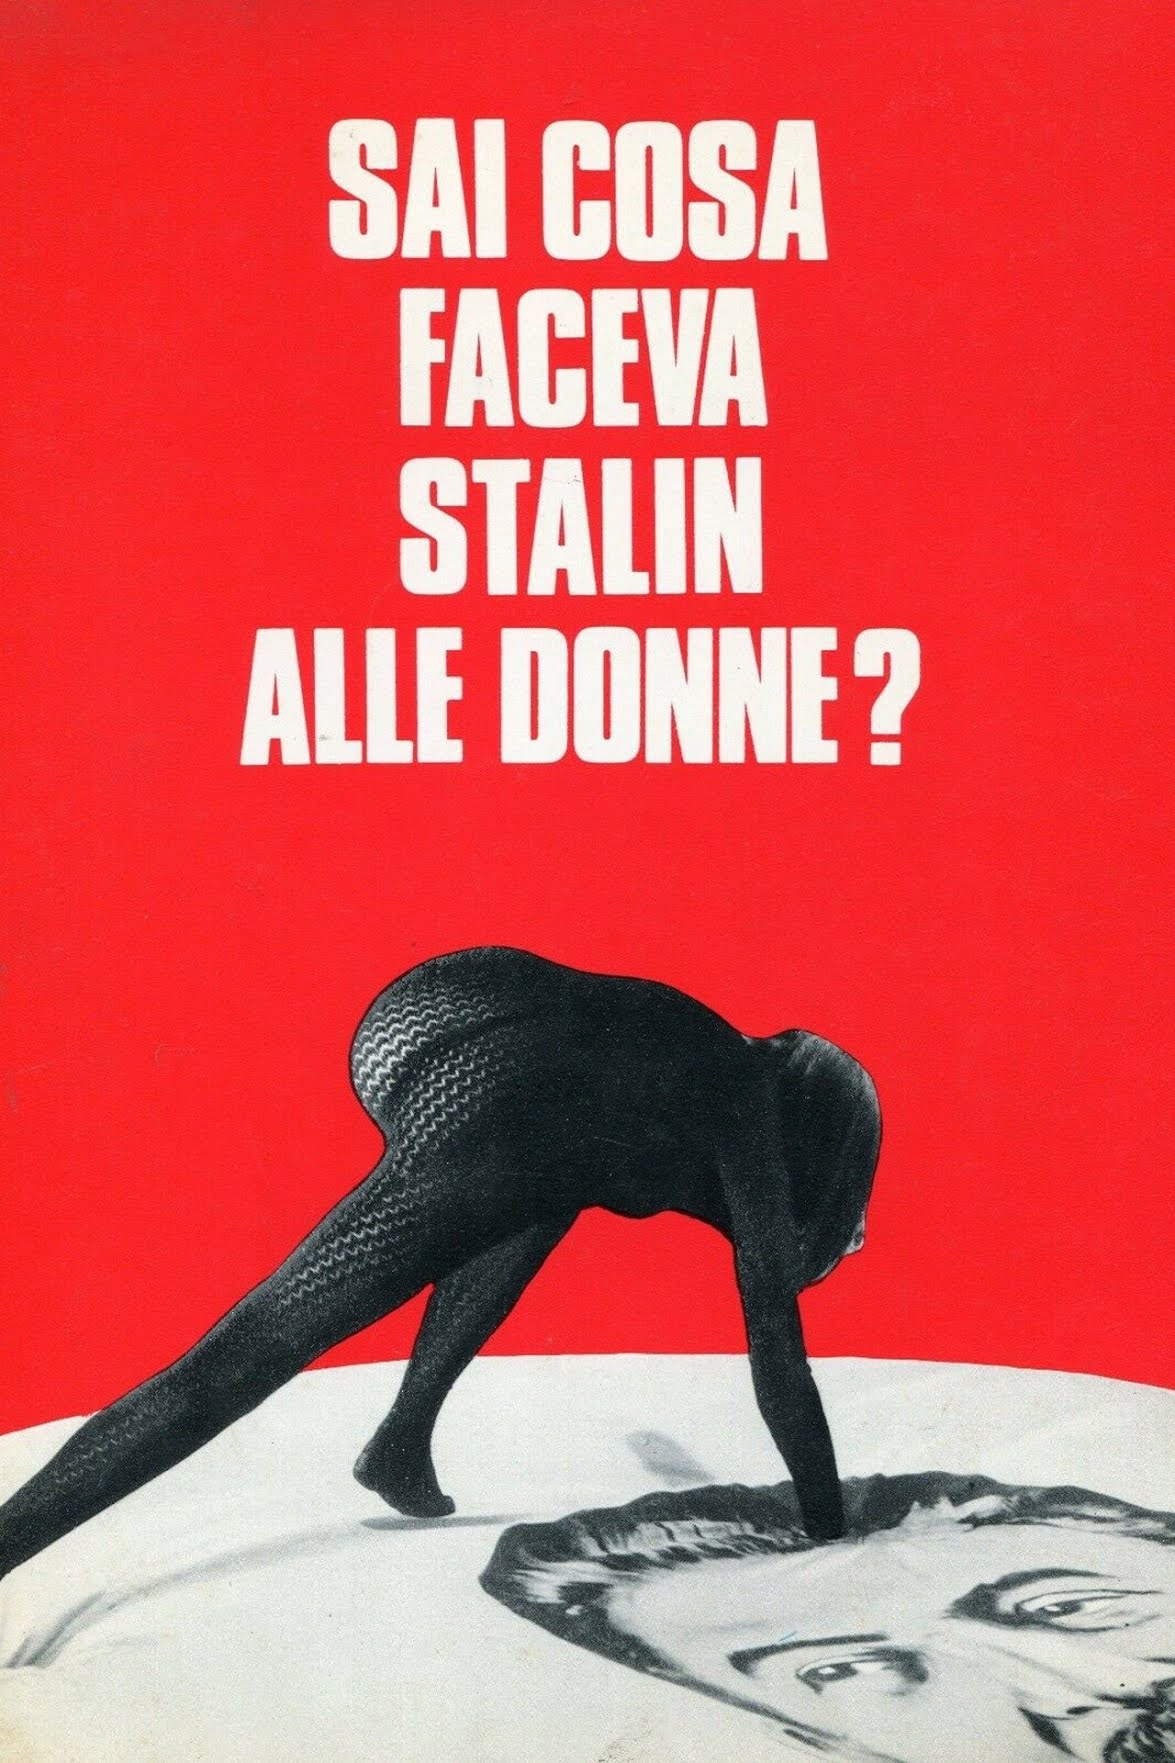 Sai cosa faceva Stalin alle donne? (1969)